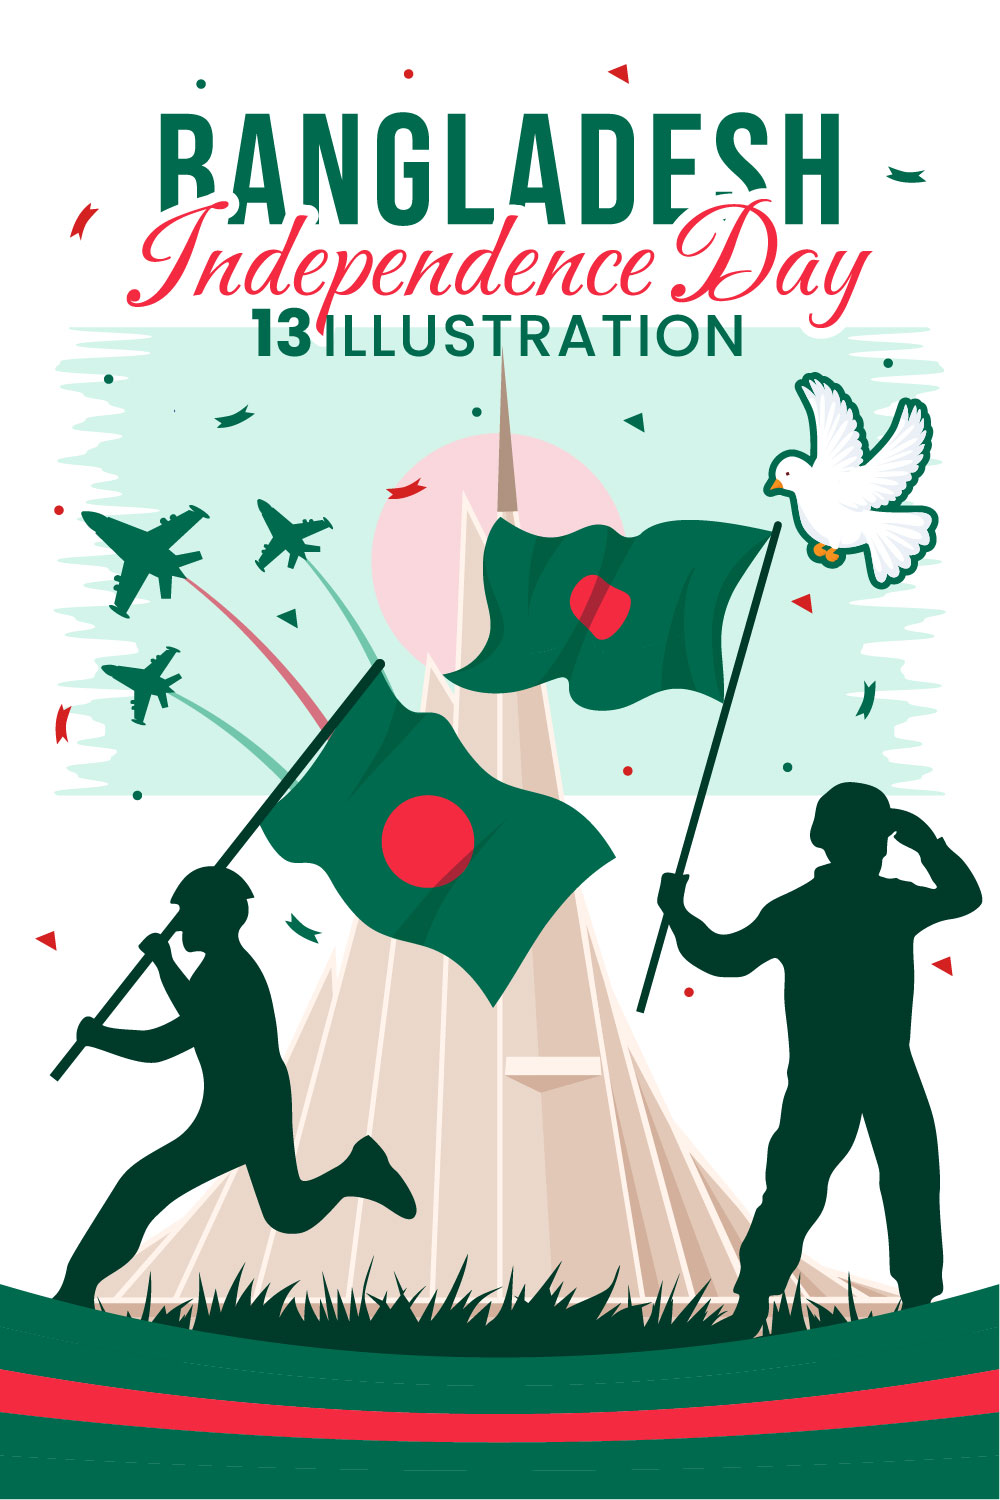 13 Bangladesh Independence Day Illustration pinterest preview image.